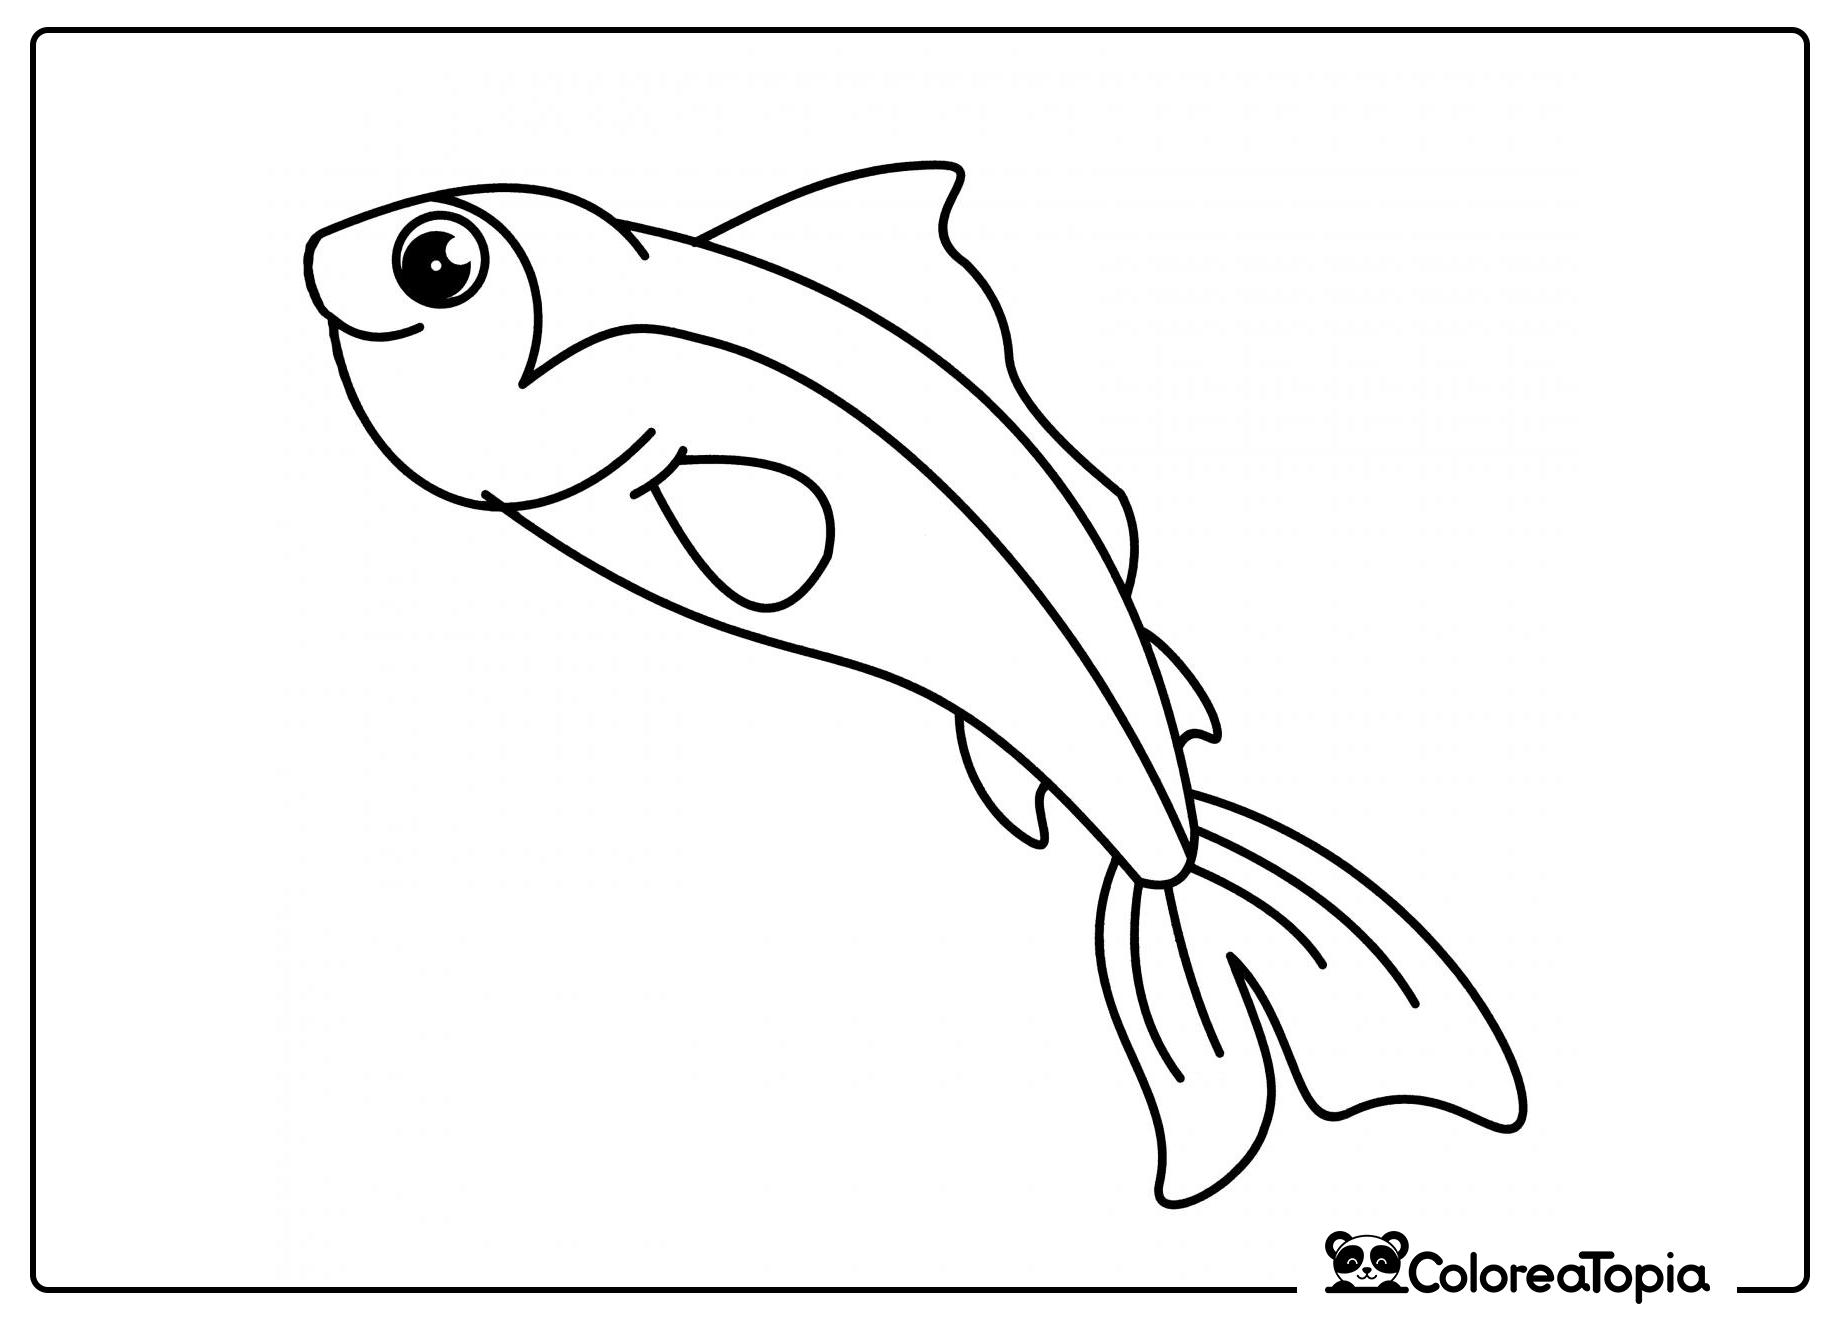 Hermoso pez guppy - dibujo para colorear